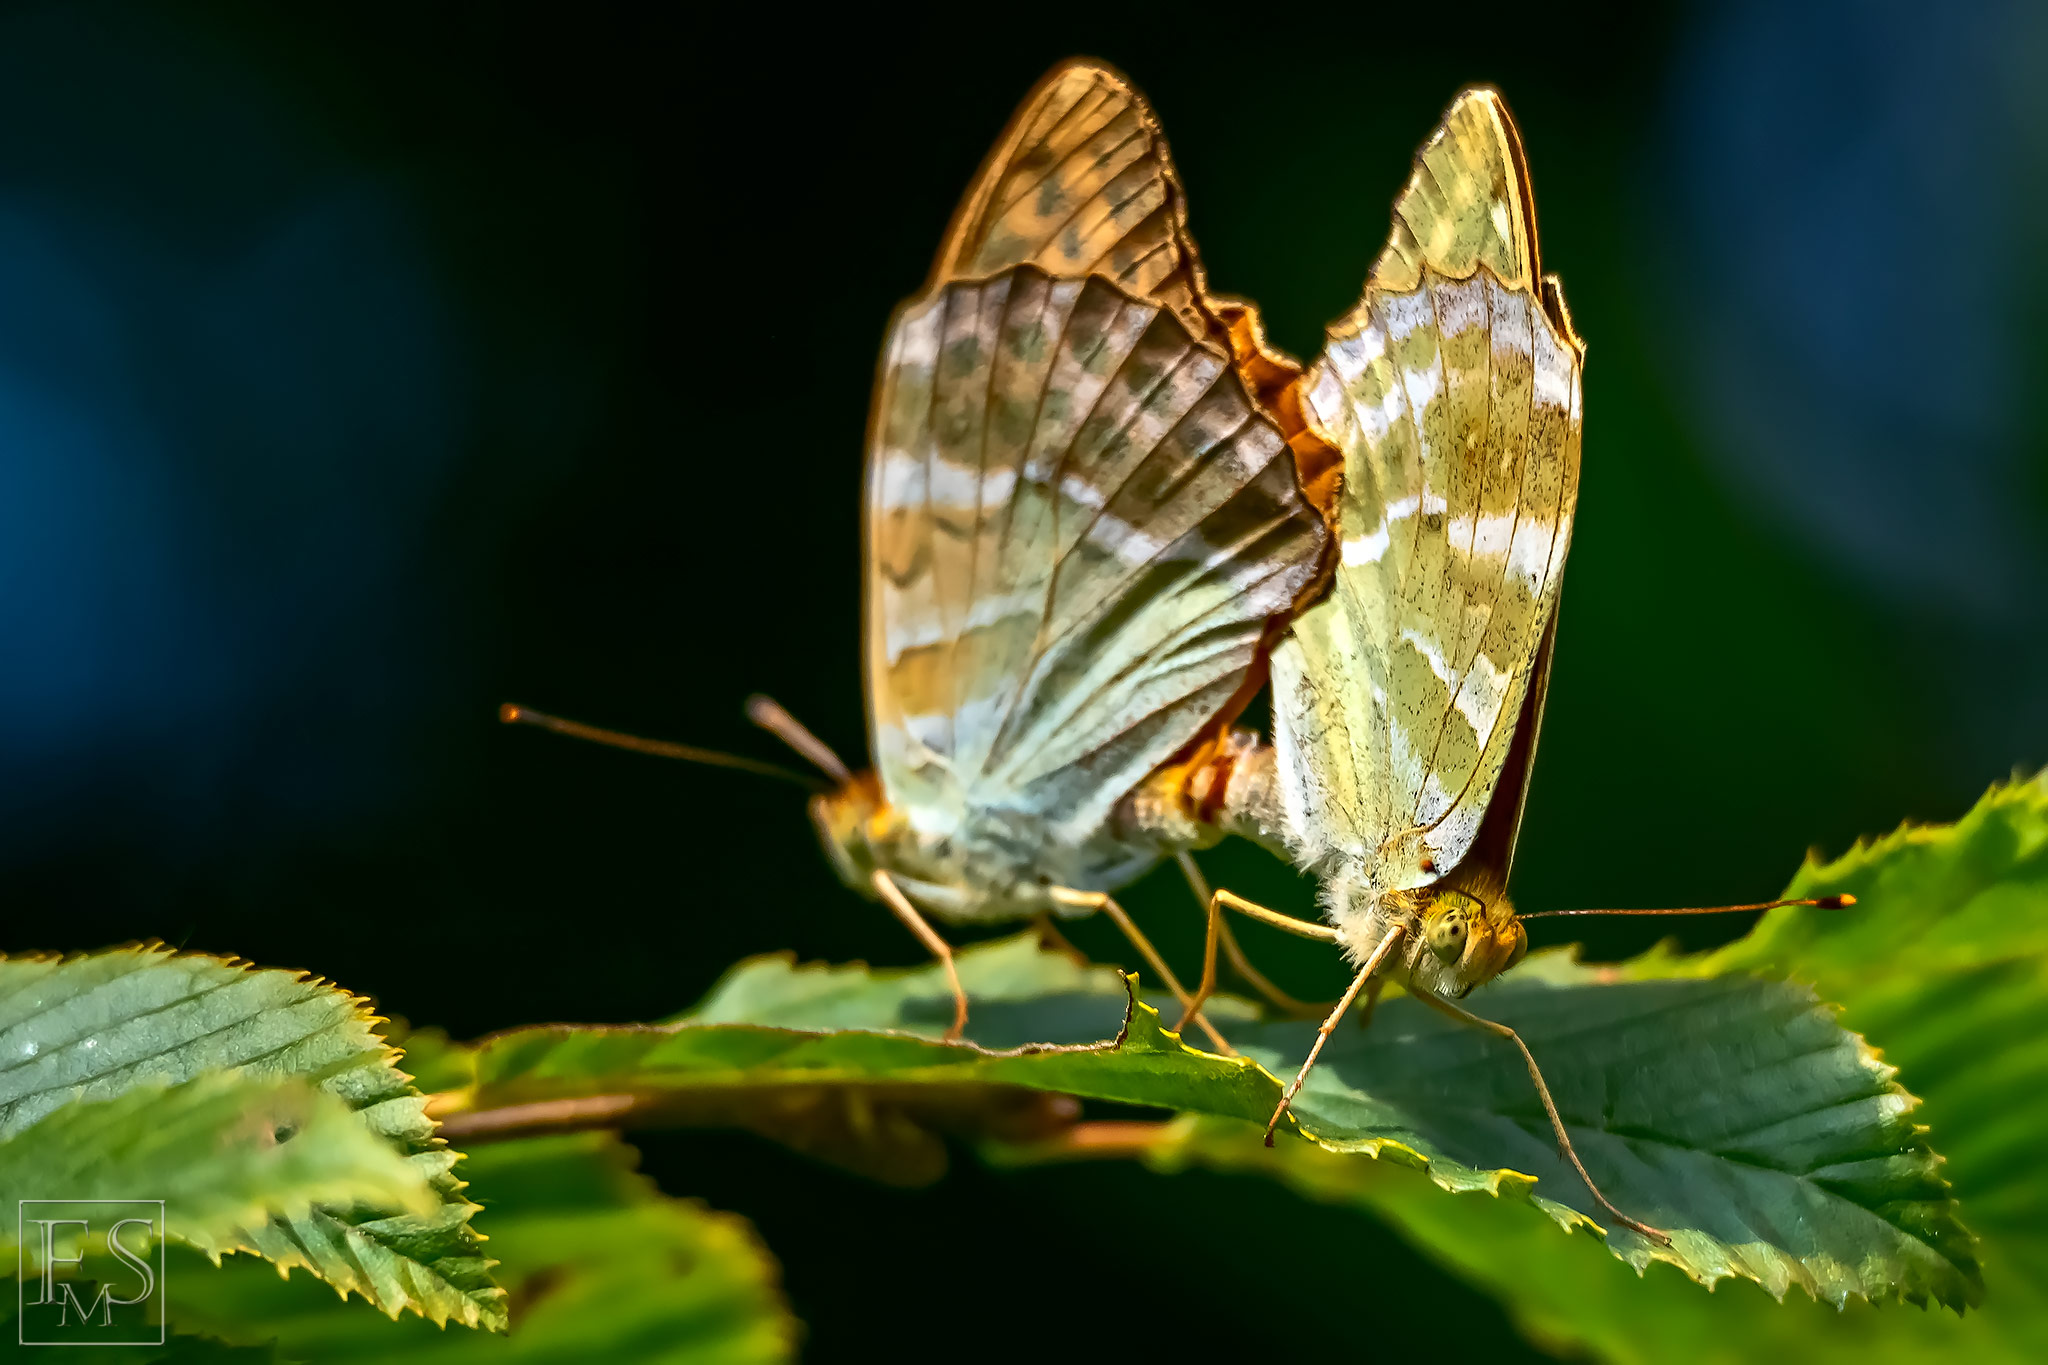 The Coupling Butterflies